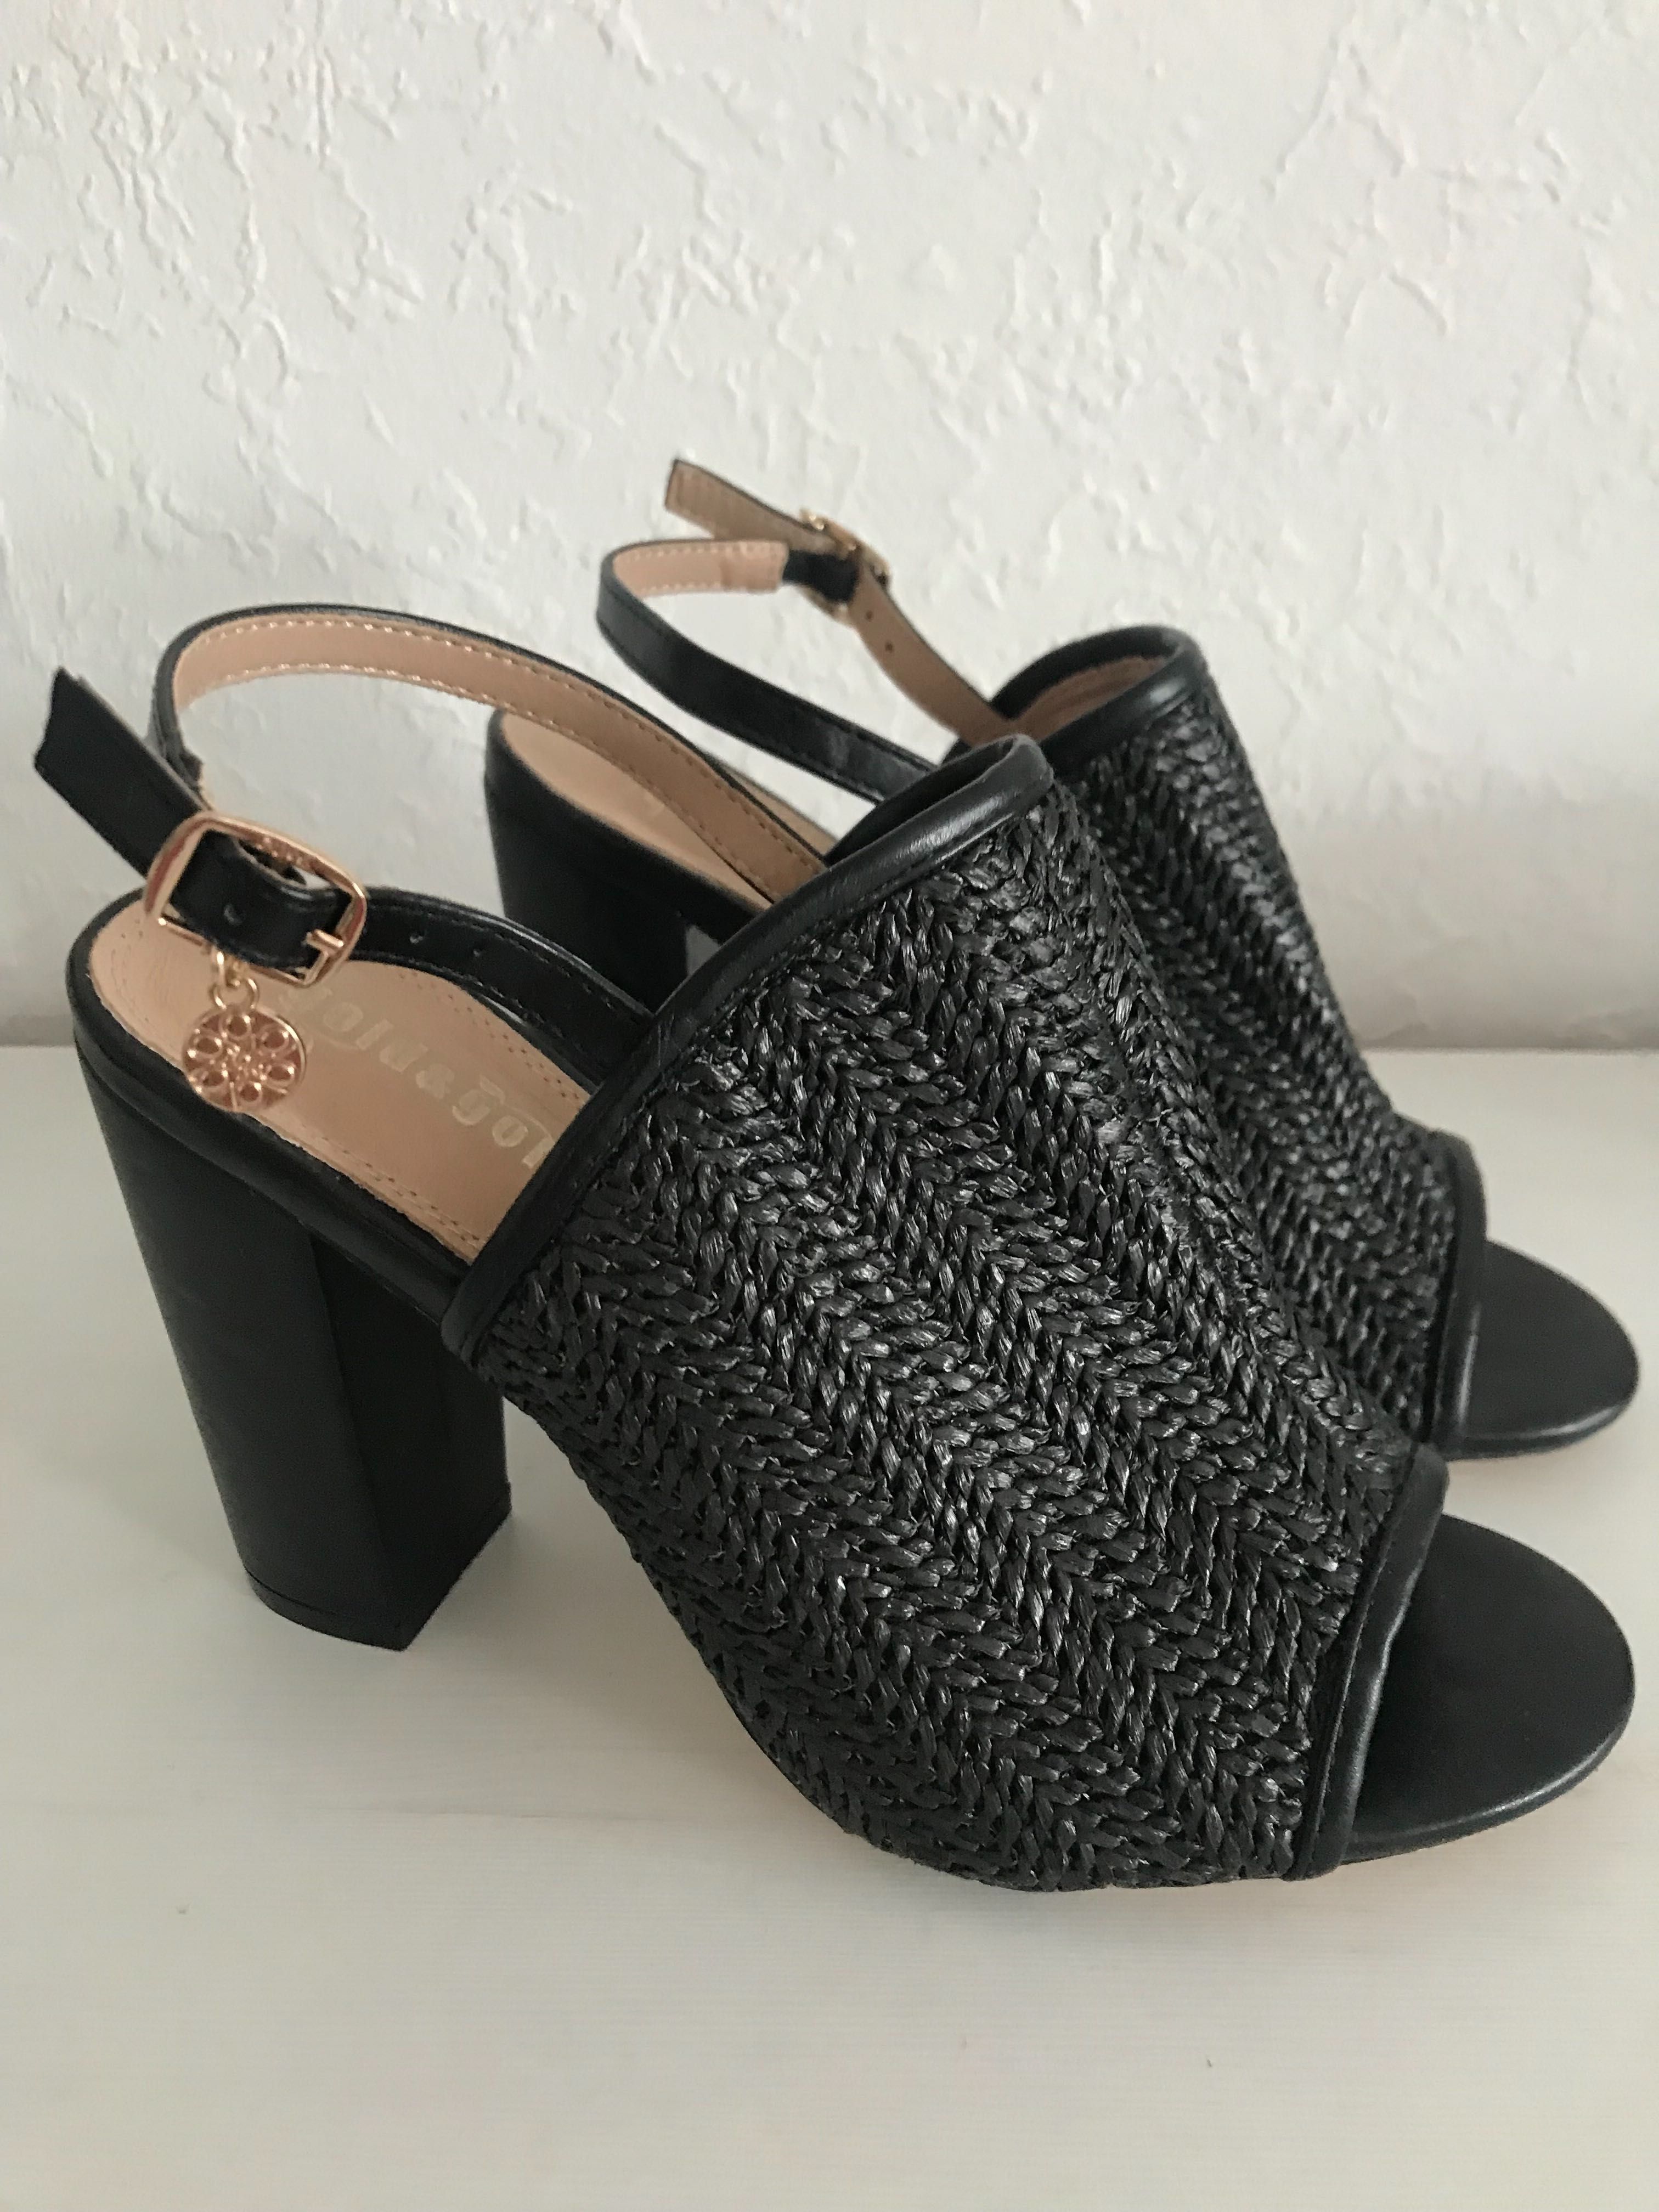 Pantofi/sandale elegante, piele calitate Italia, 39, au costat 160 eur